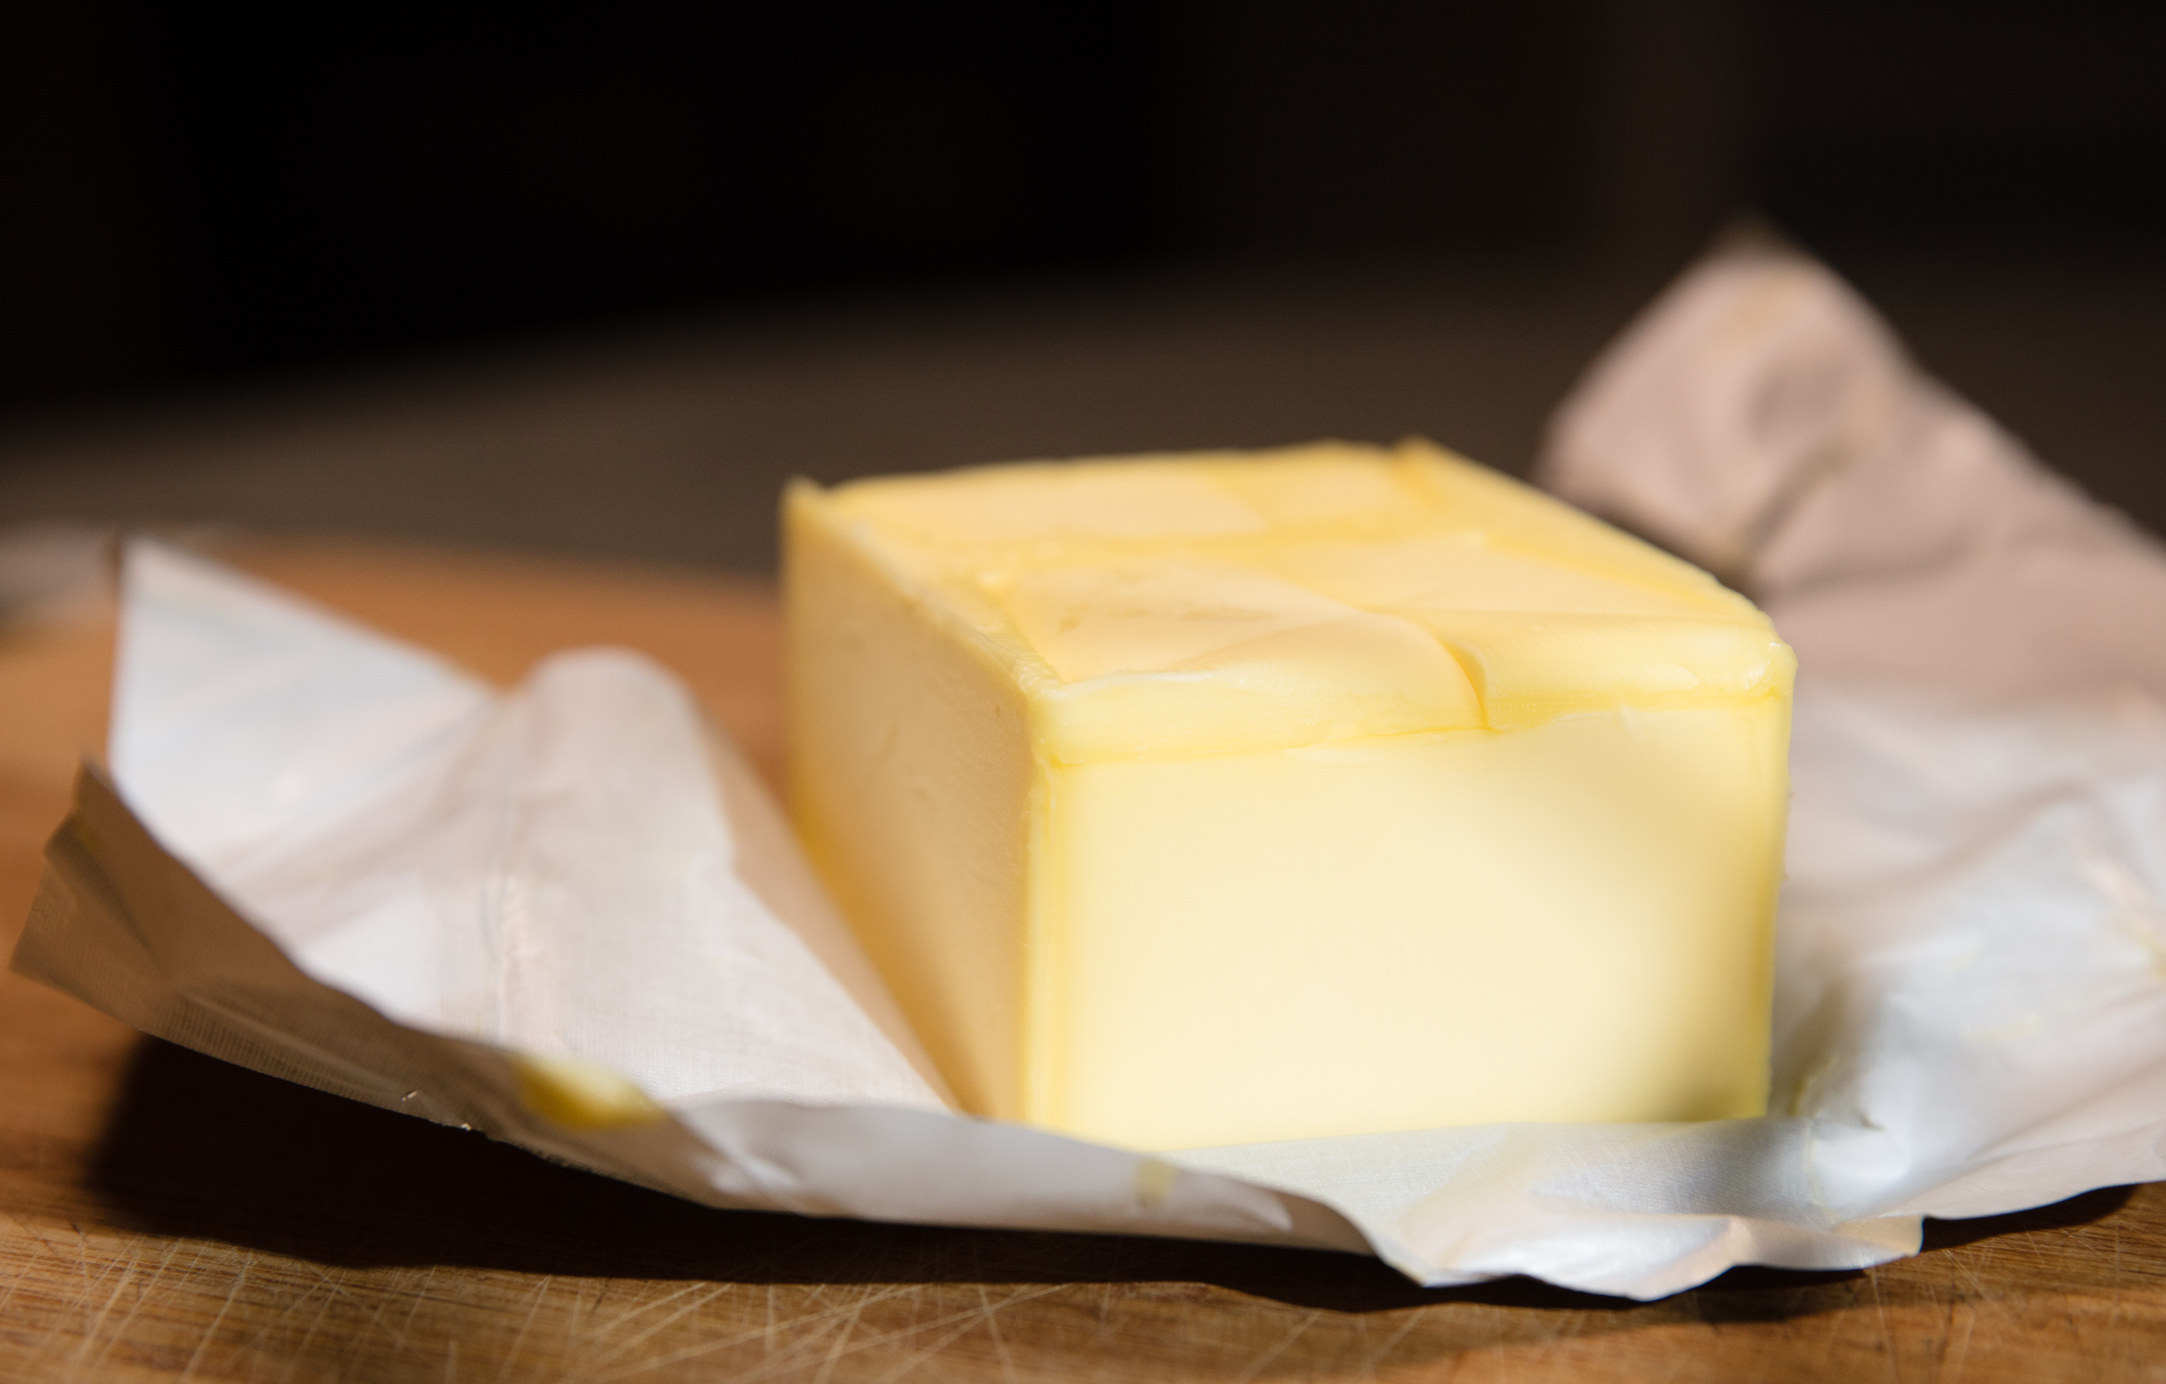 An open package of butter.